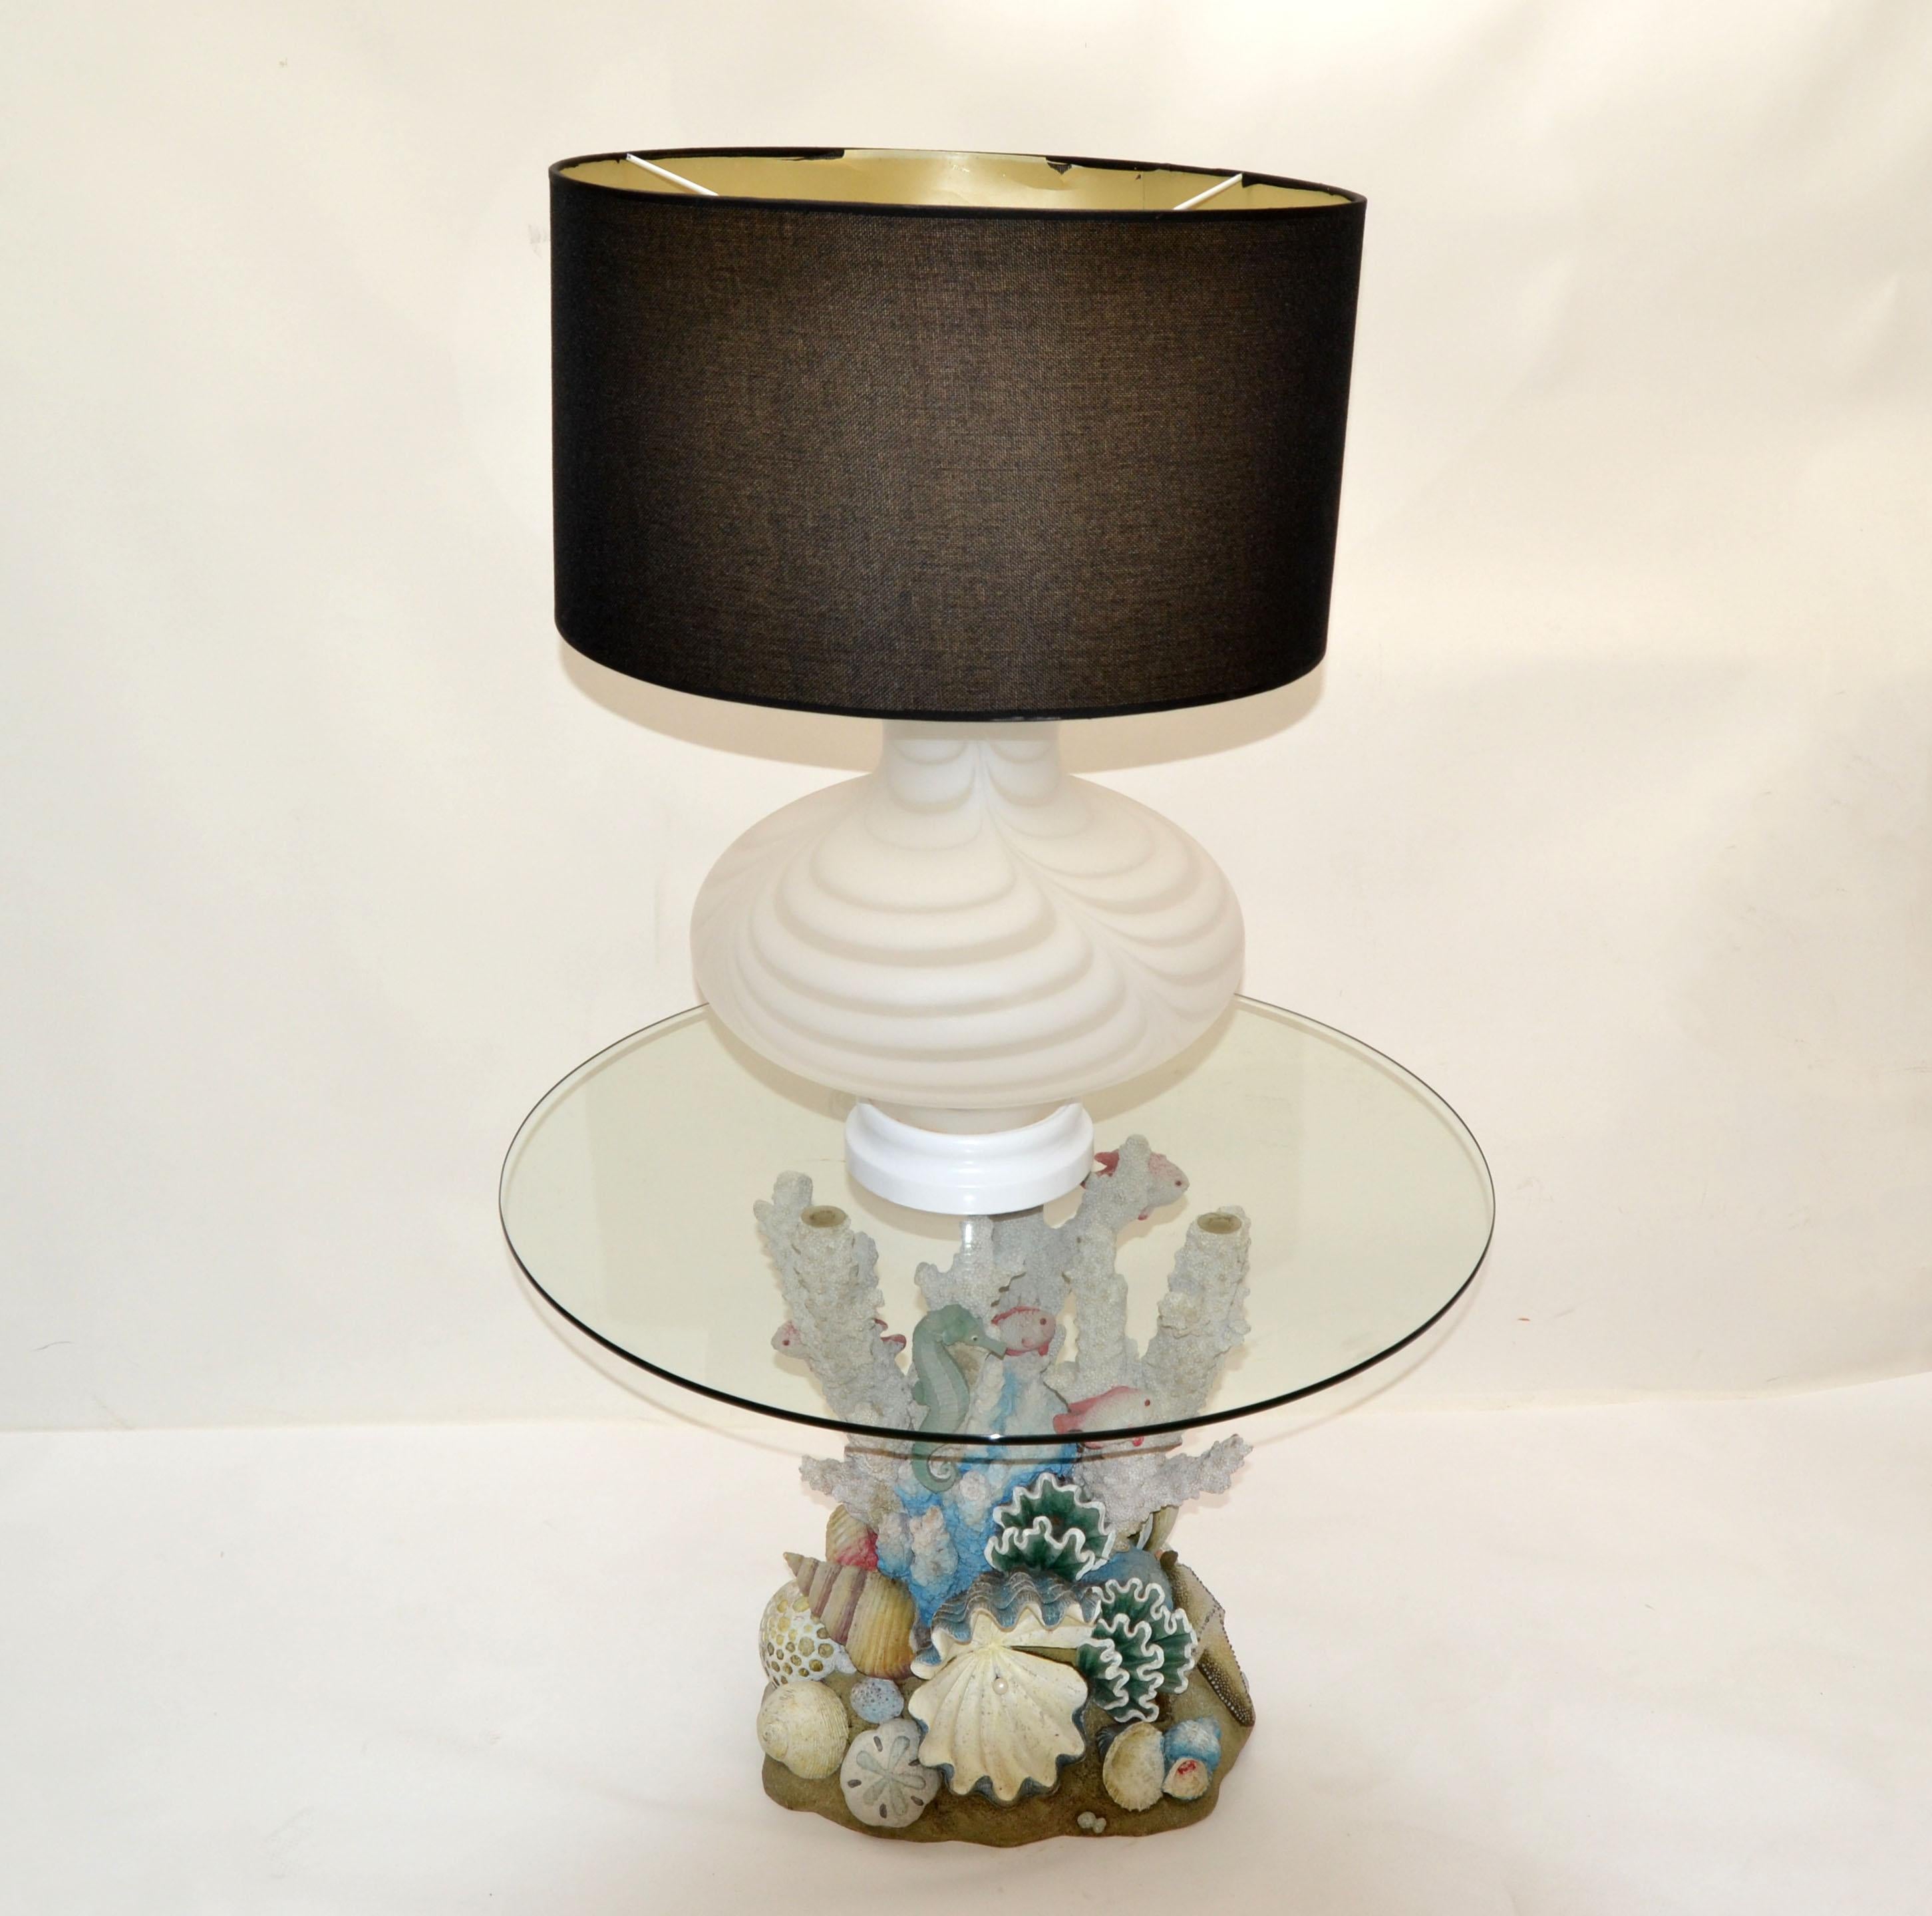 Mazzega Murano Style Table Lamp Swirled Mottled White Murano Glass 1970 Italy For Sale 1